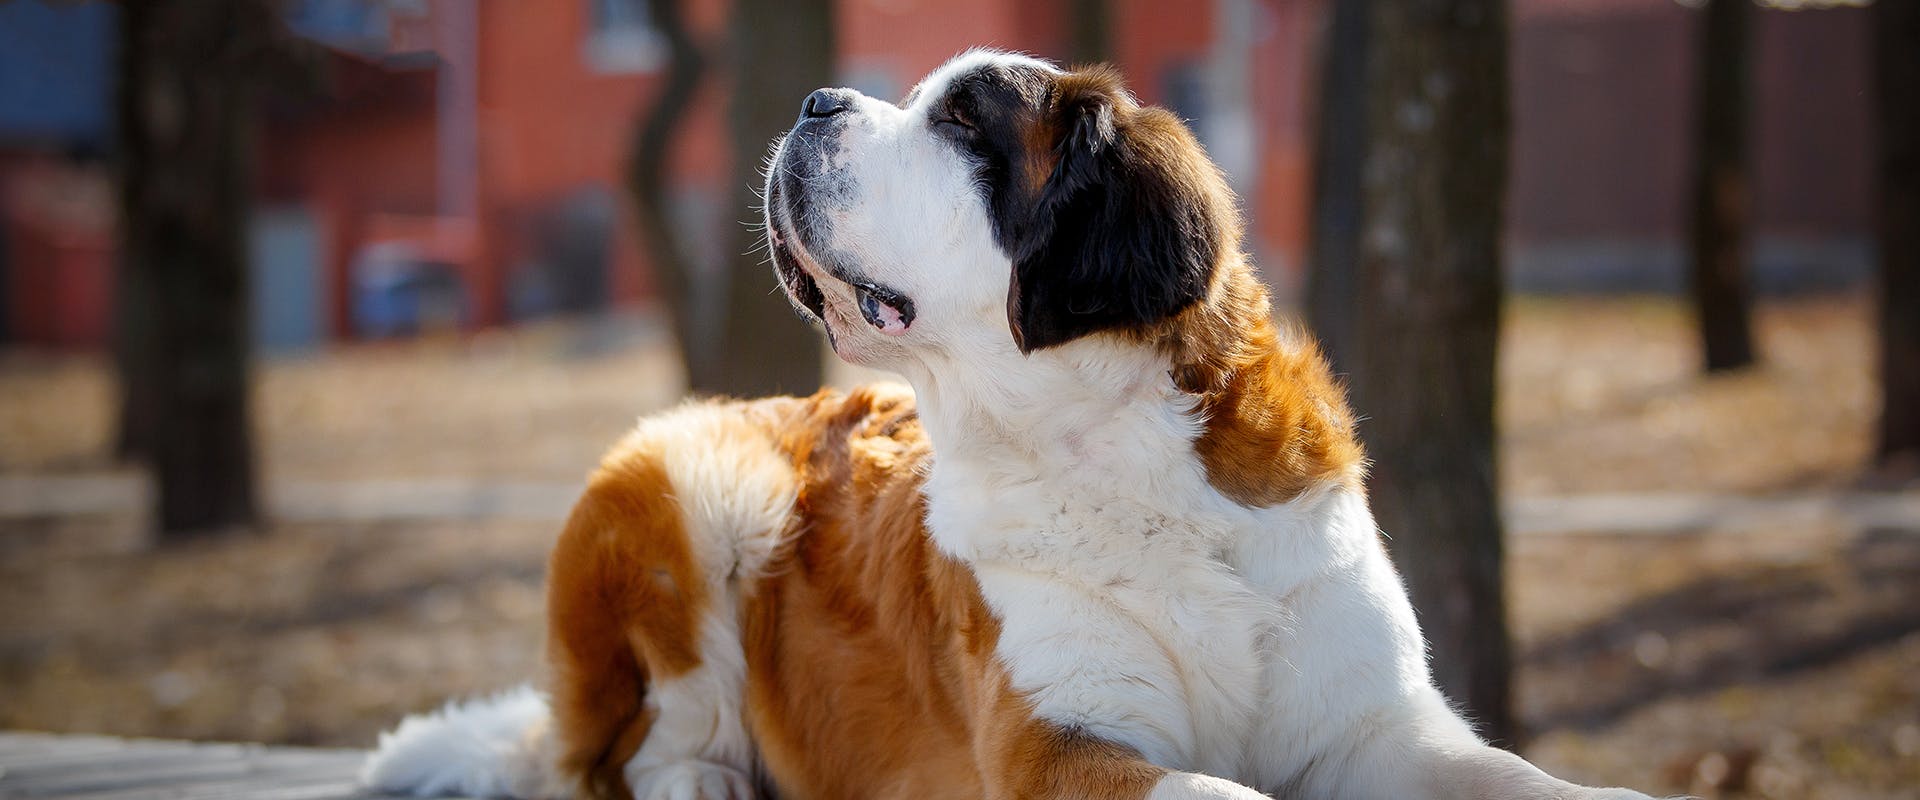 A St Bernard dog sitting on a deck, looking upwards